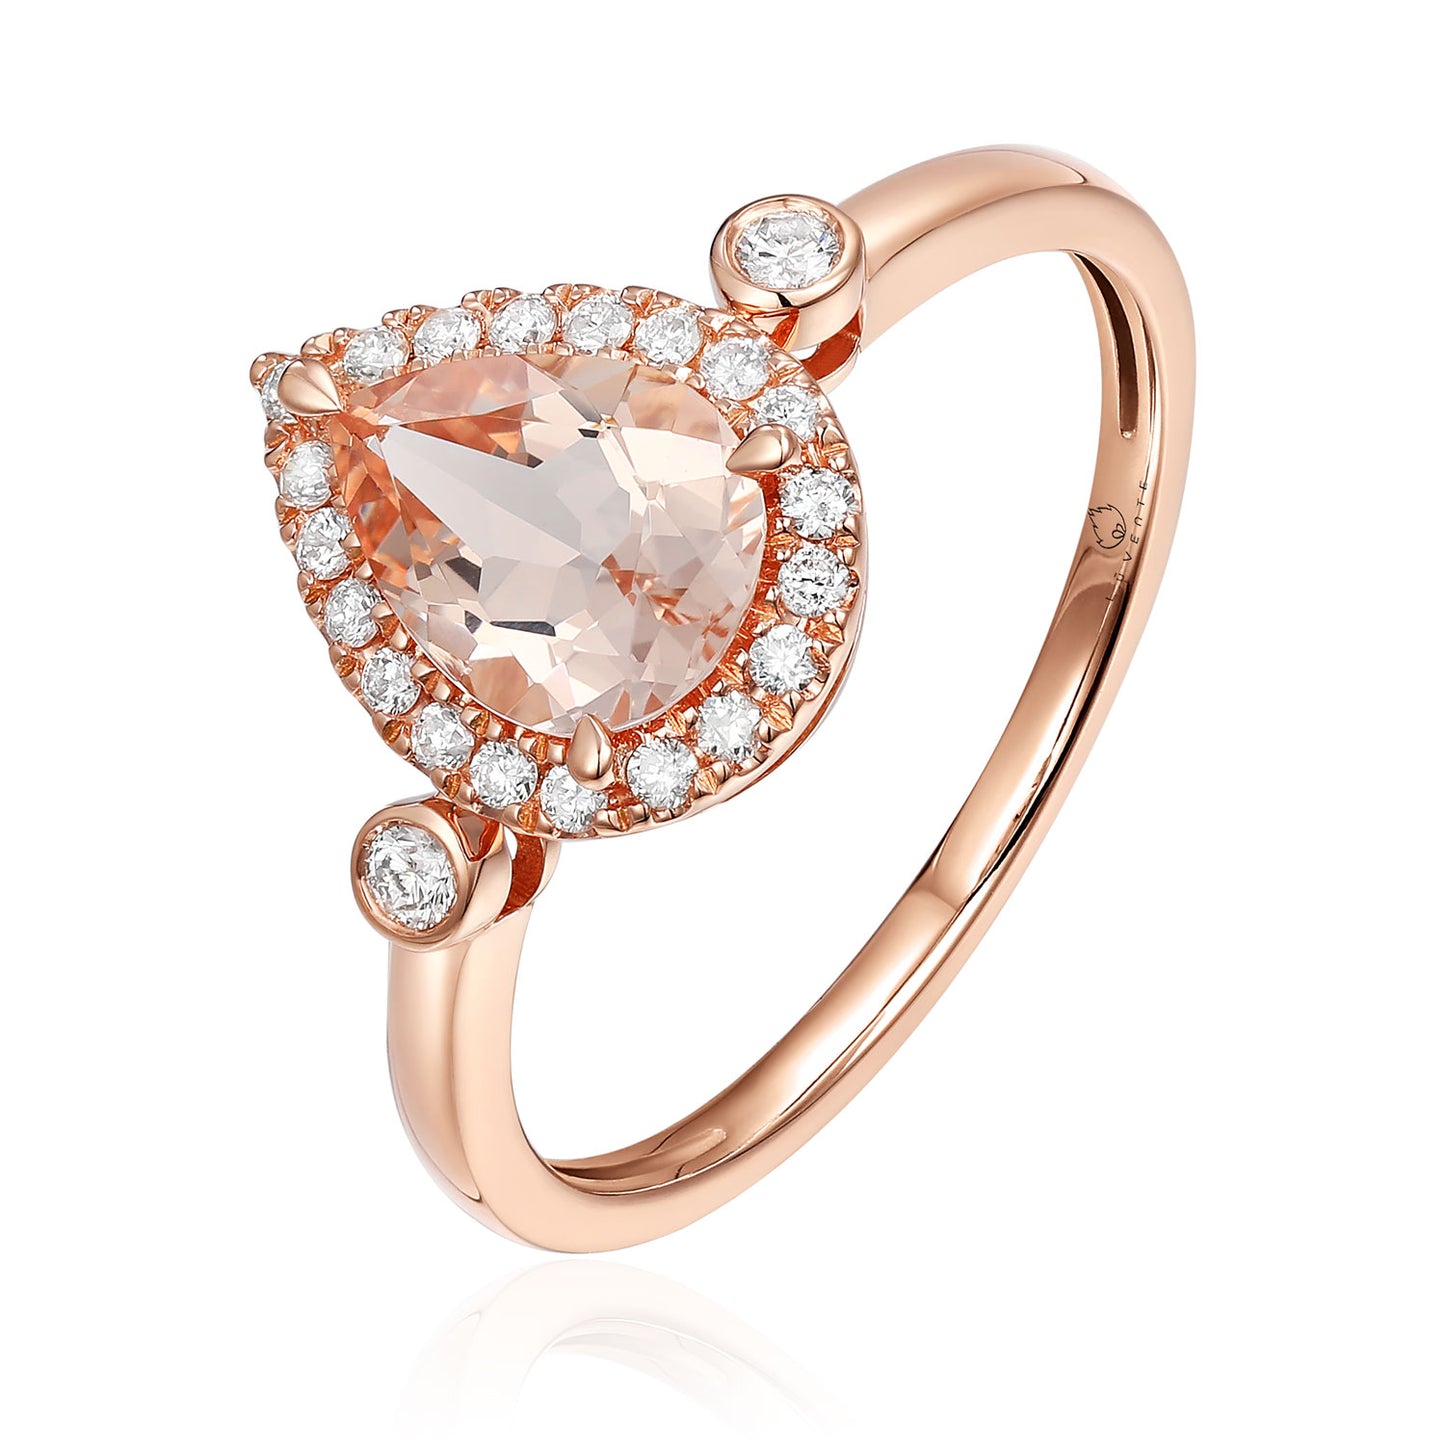 Luvente Role Gold Morganite & Diamond Halo Ring - Colored Stone Rings - Women's